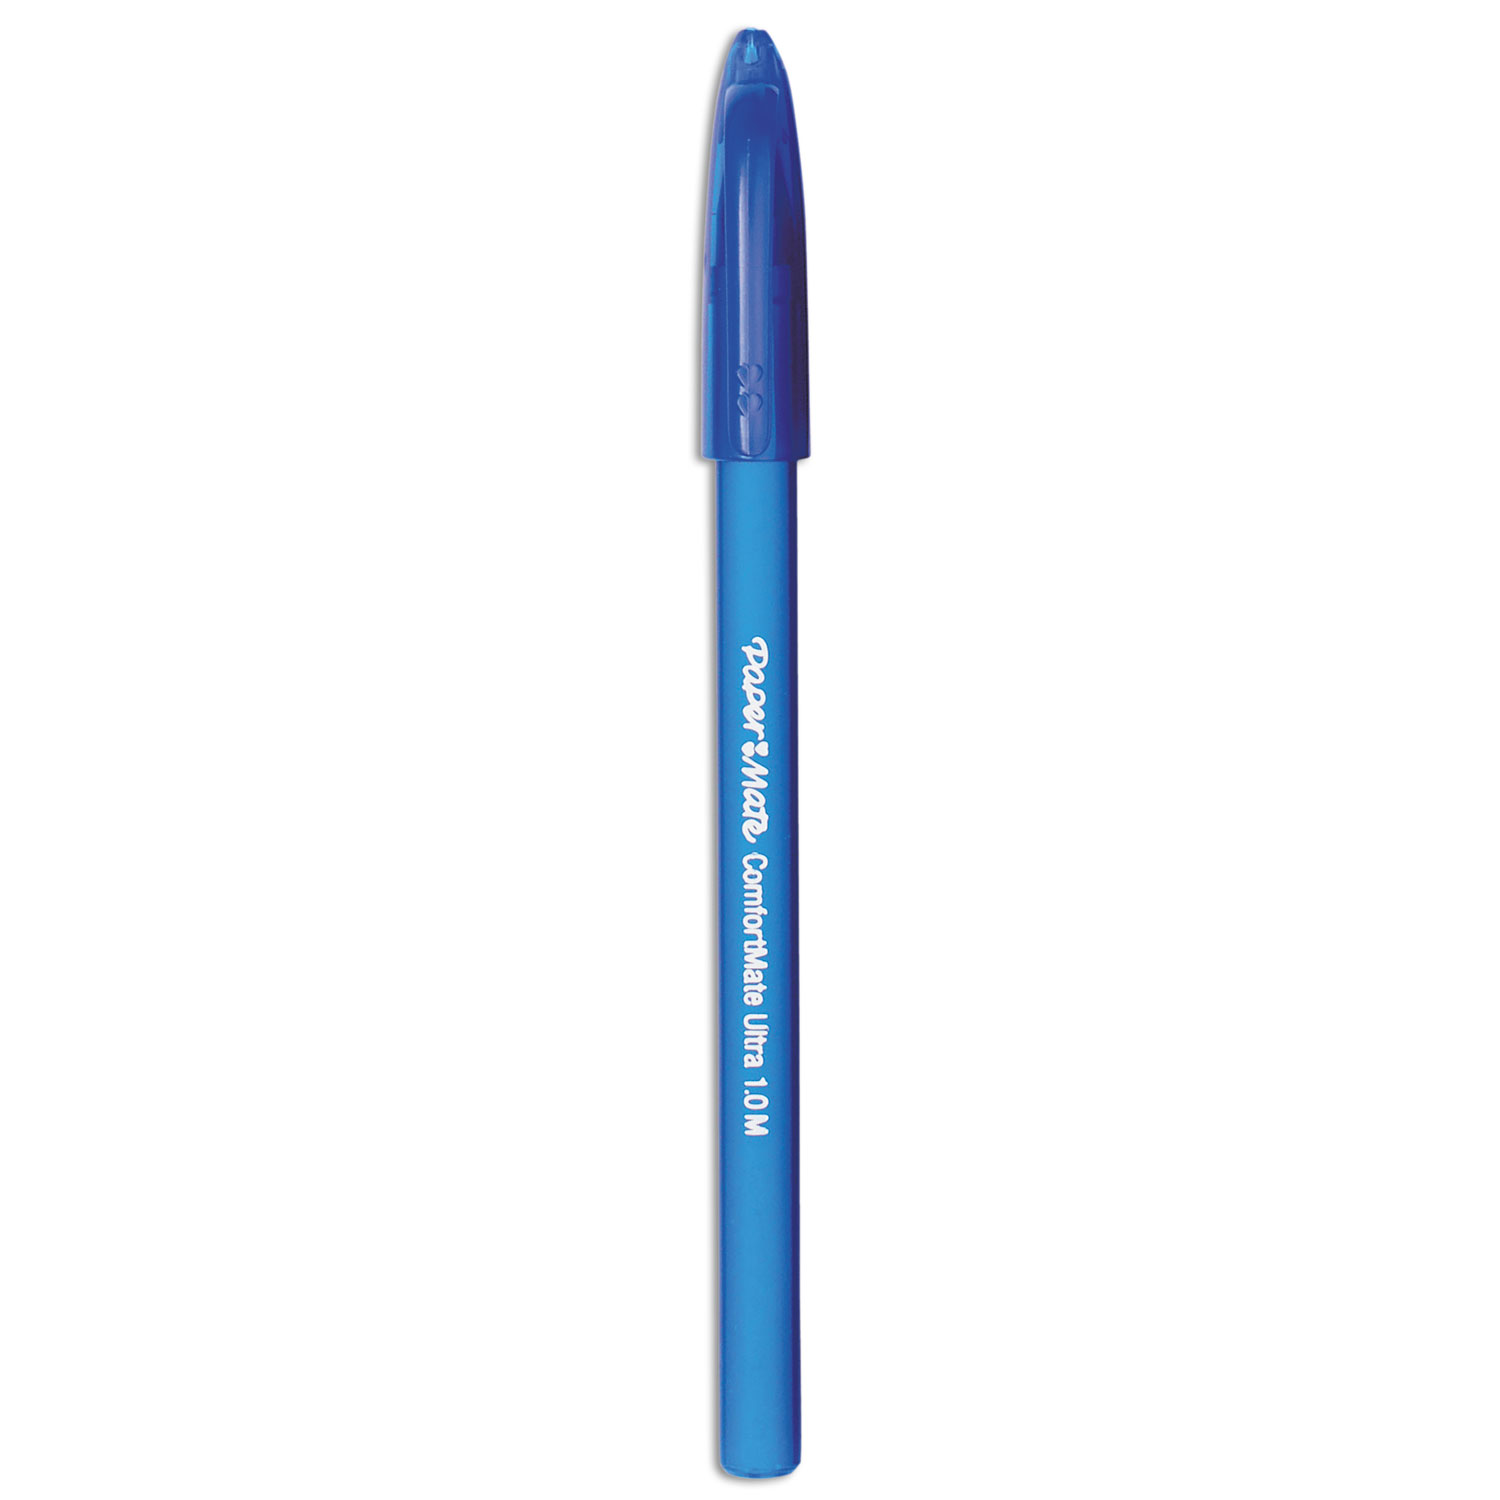 Paper Mate FlexGrip stylos gel, pointe moyenne (0,7 mm), Encre bleue